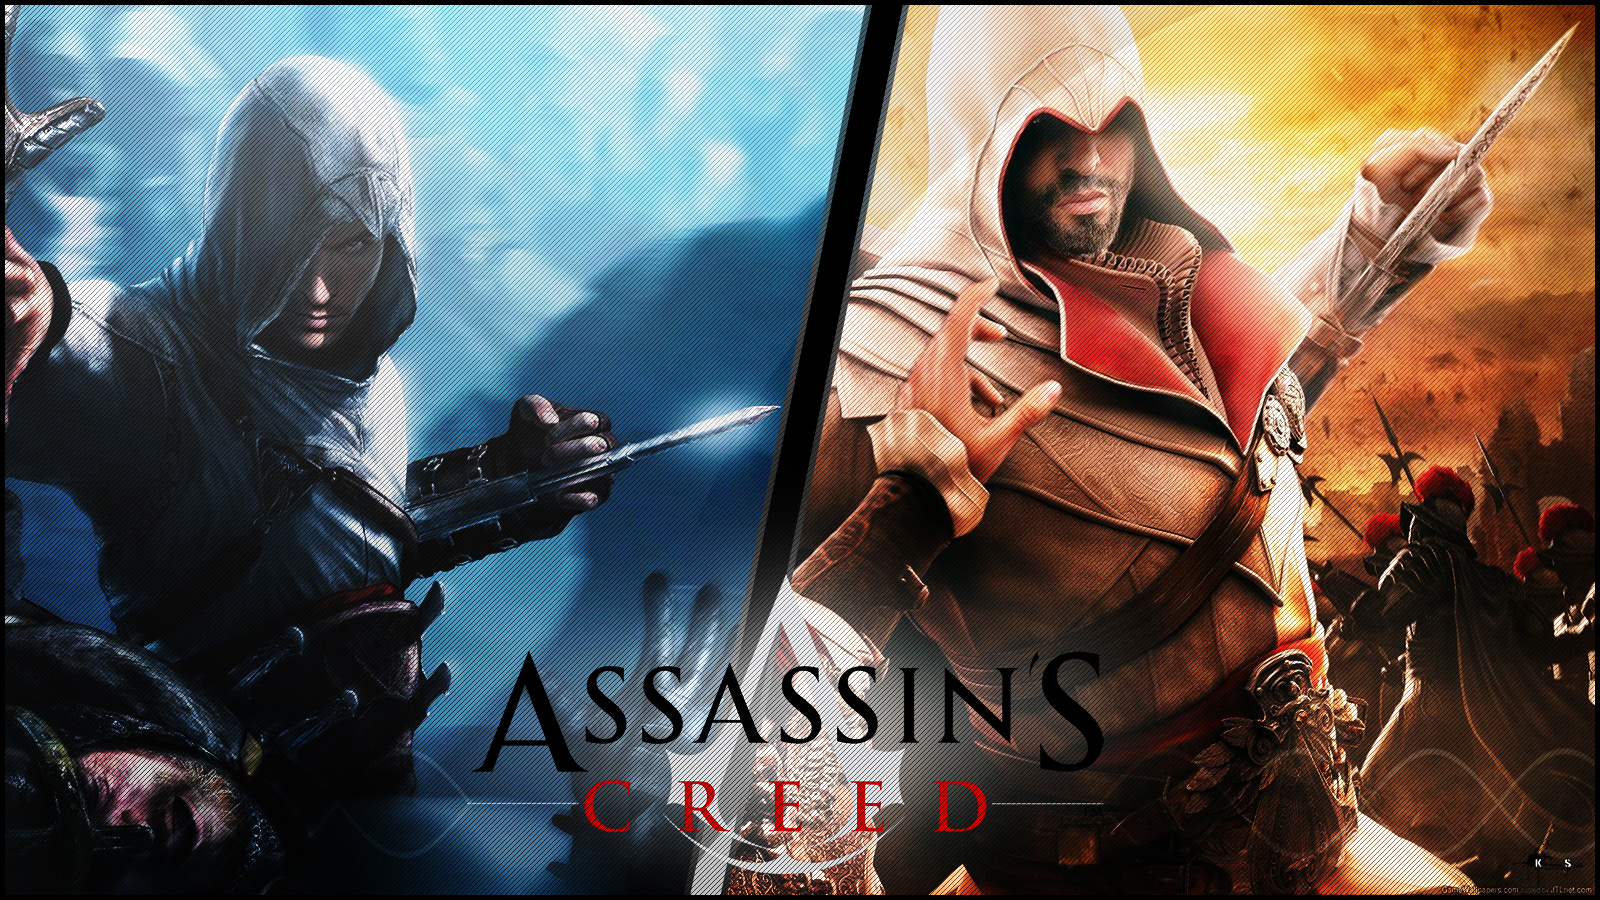 Assassin's Creed : 'Penumbra' - Series Trailer